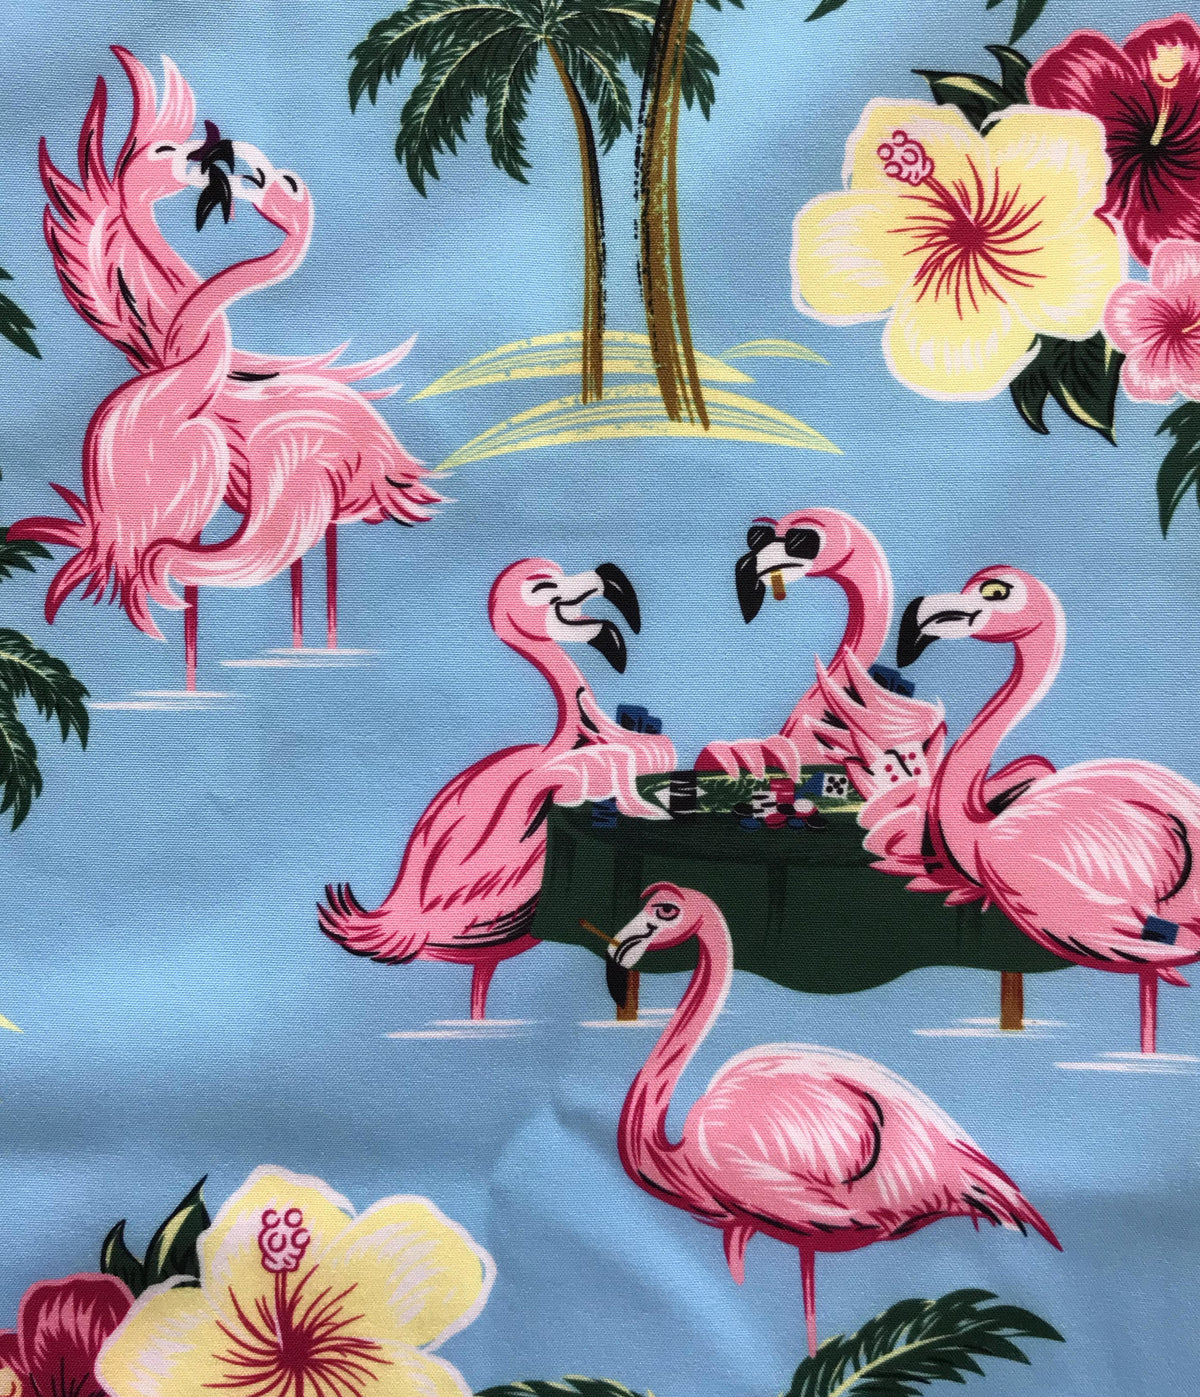 Naughty Flamingo | Funny Drinking Sex Party Hawaiian Button Down Polo Shirt Men